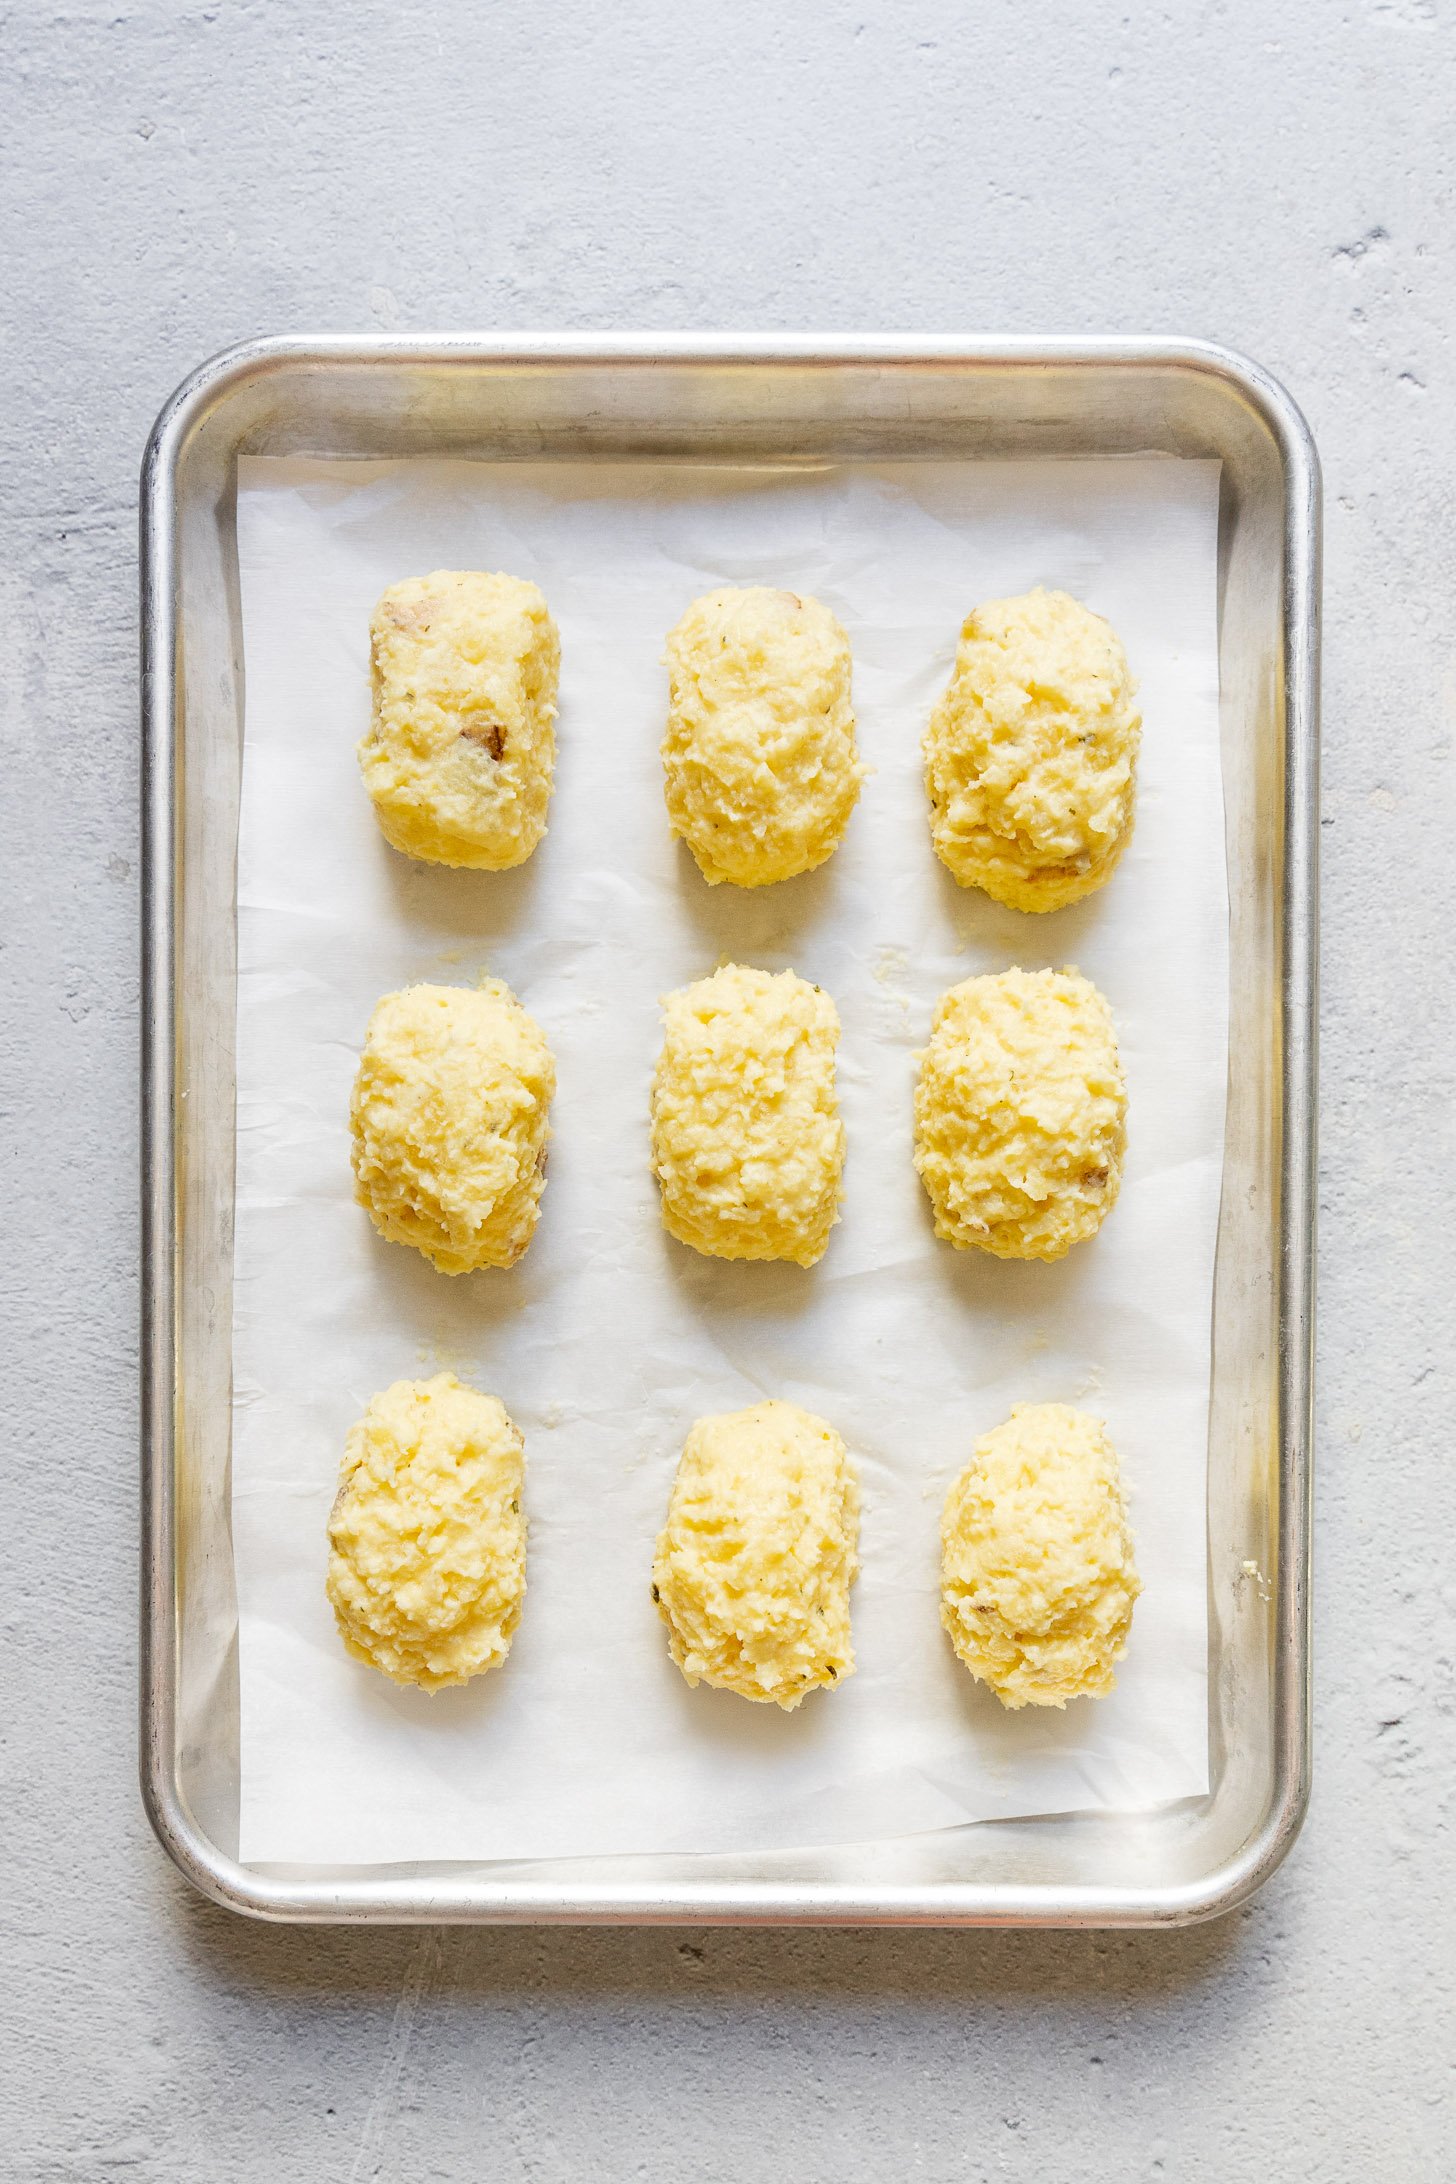 Potato croquettes shaped on baking sheet.